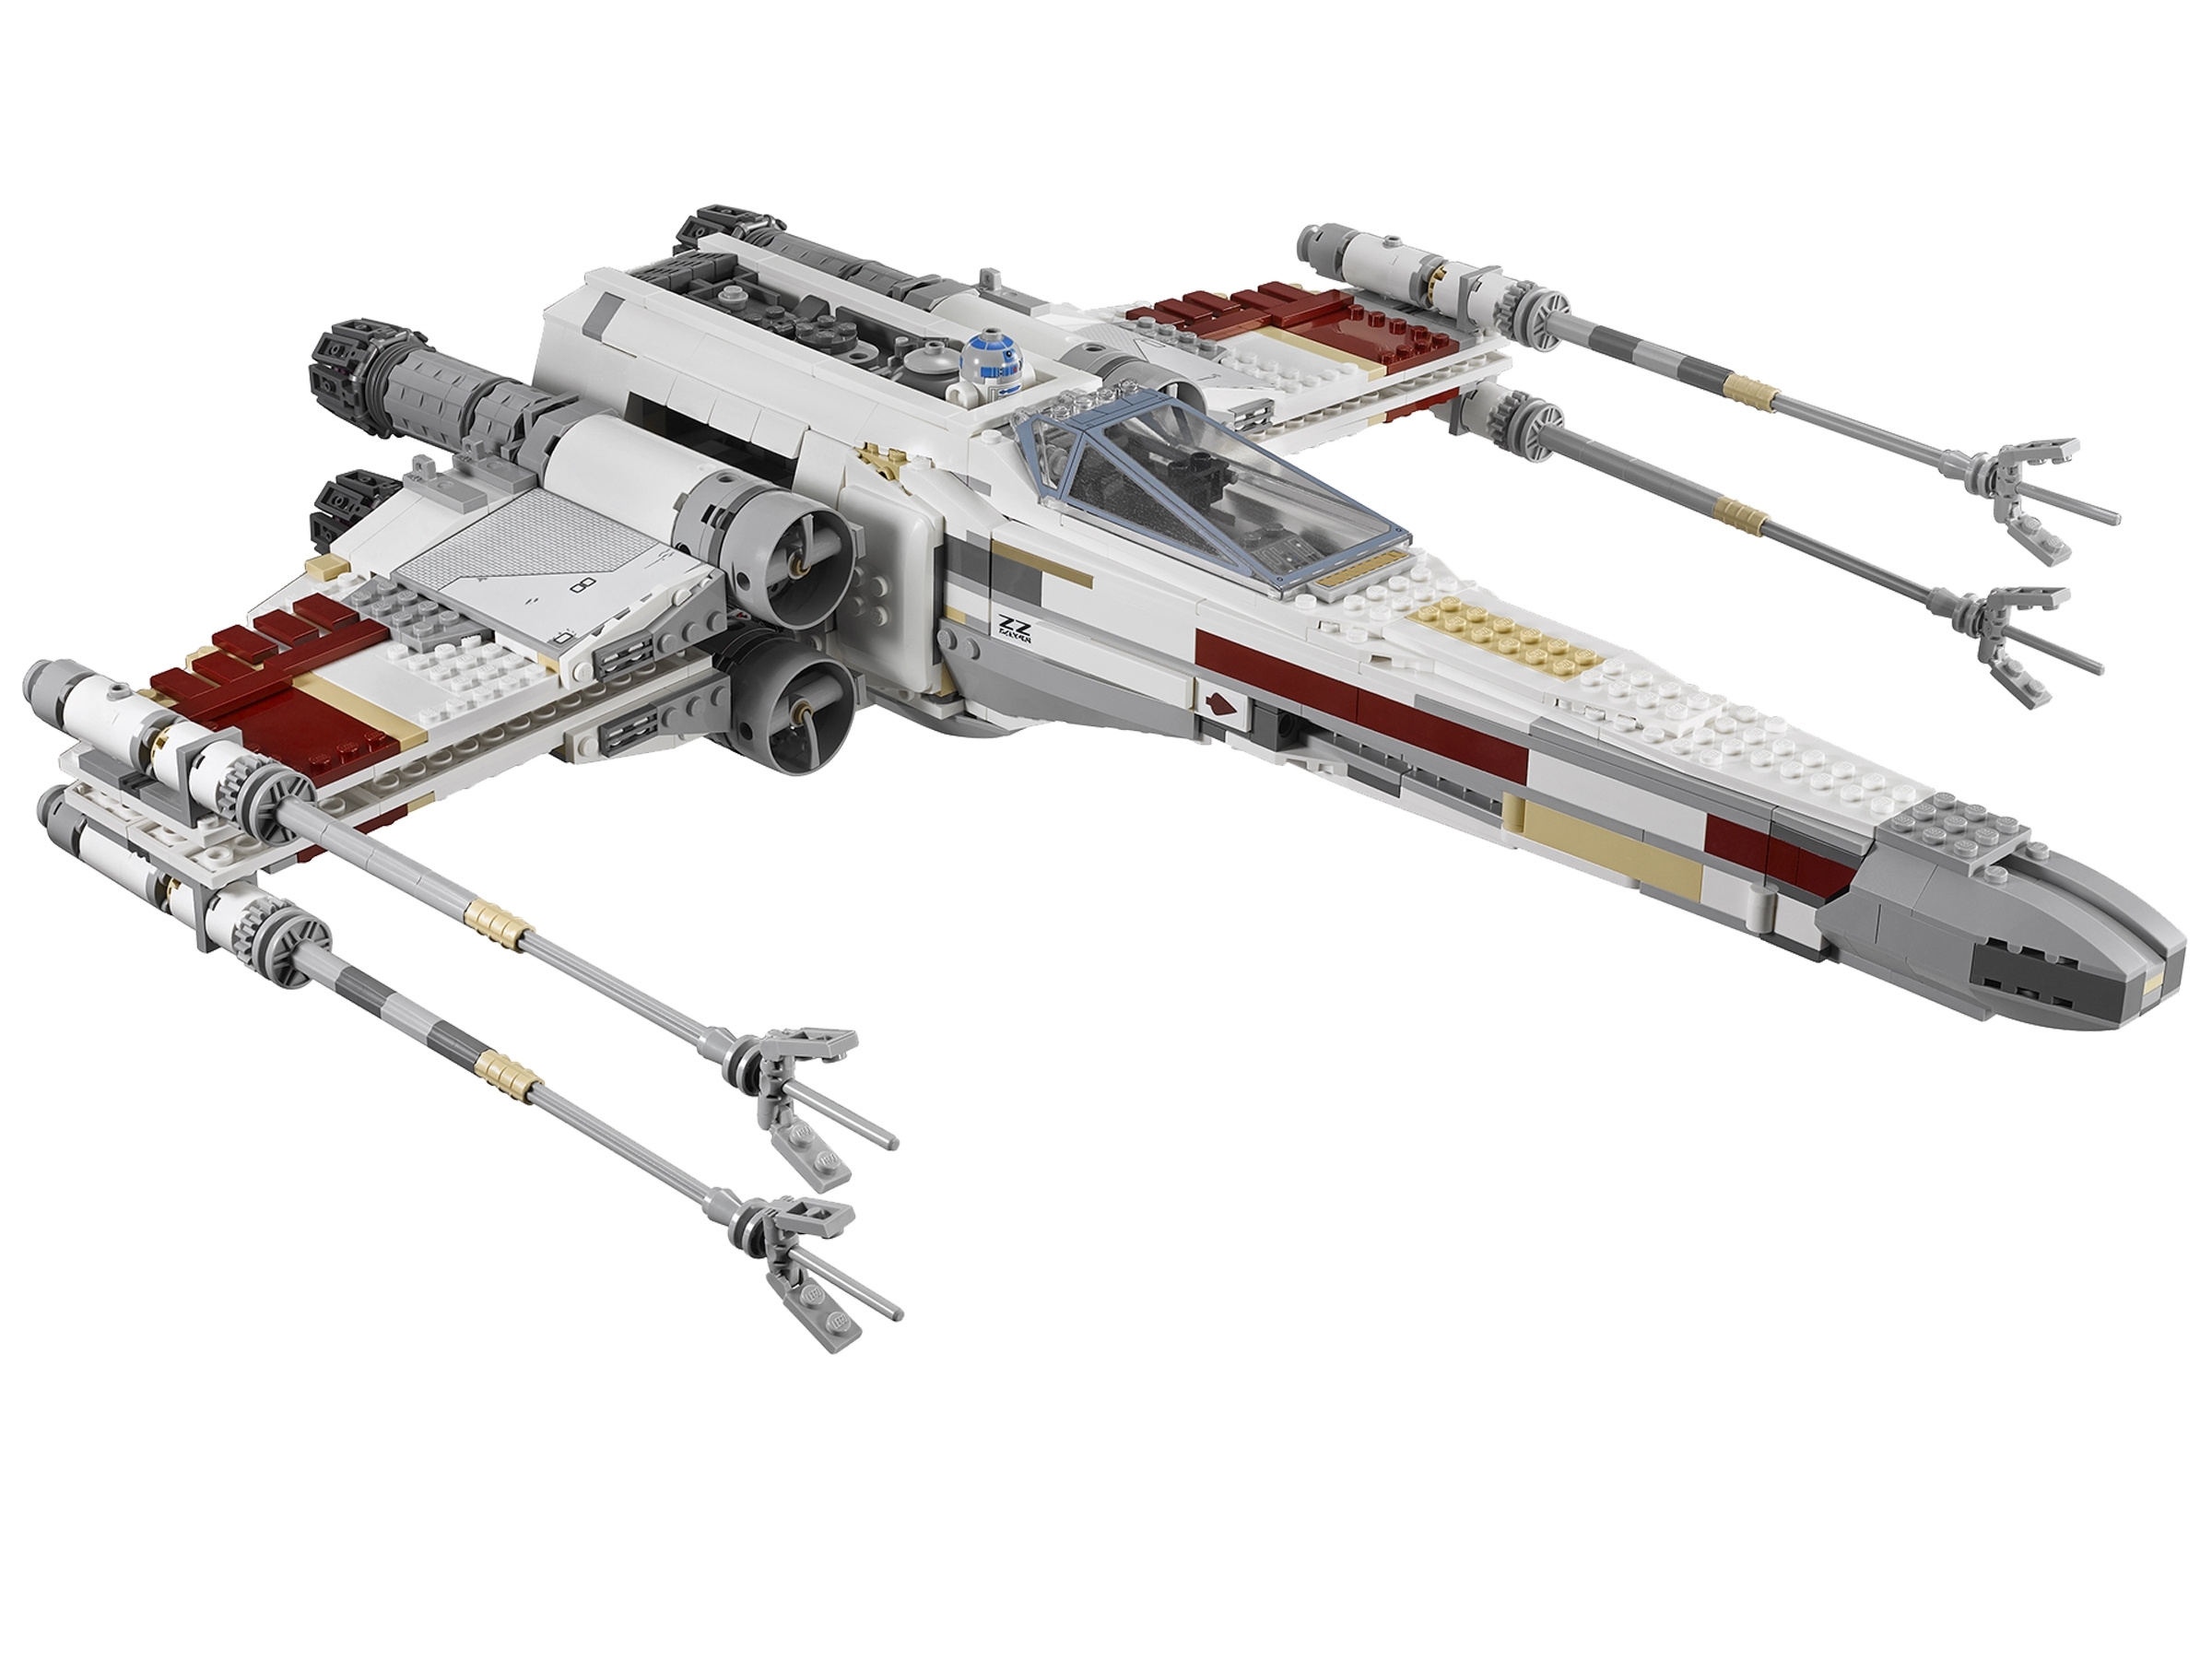 LEGO 10240 Star Wars Red Five X-wing Starfighter NIB Sealed Retired